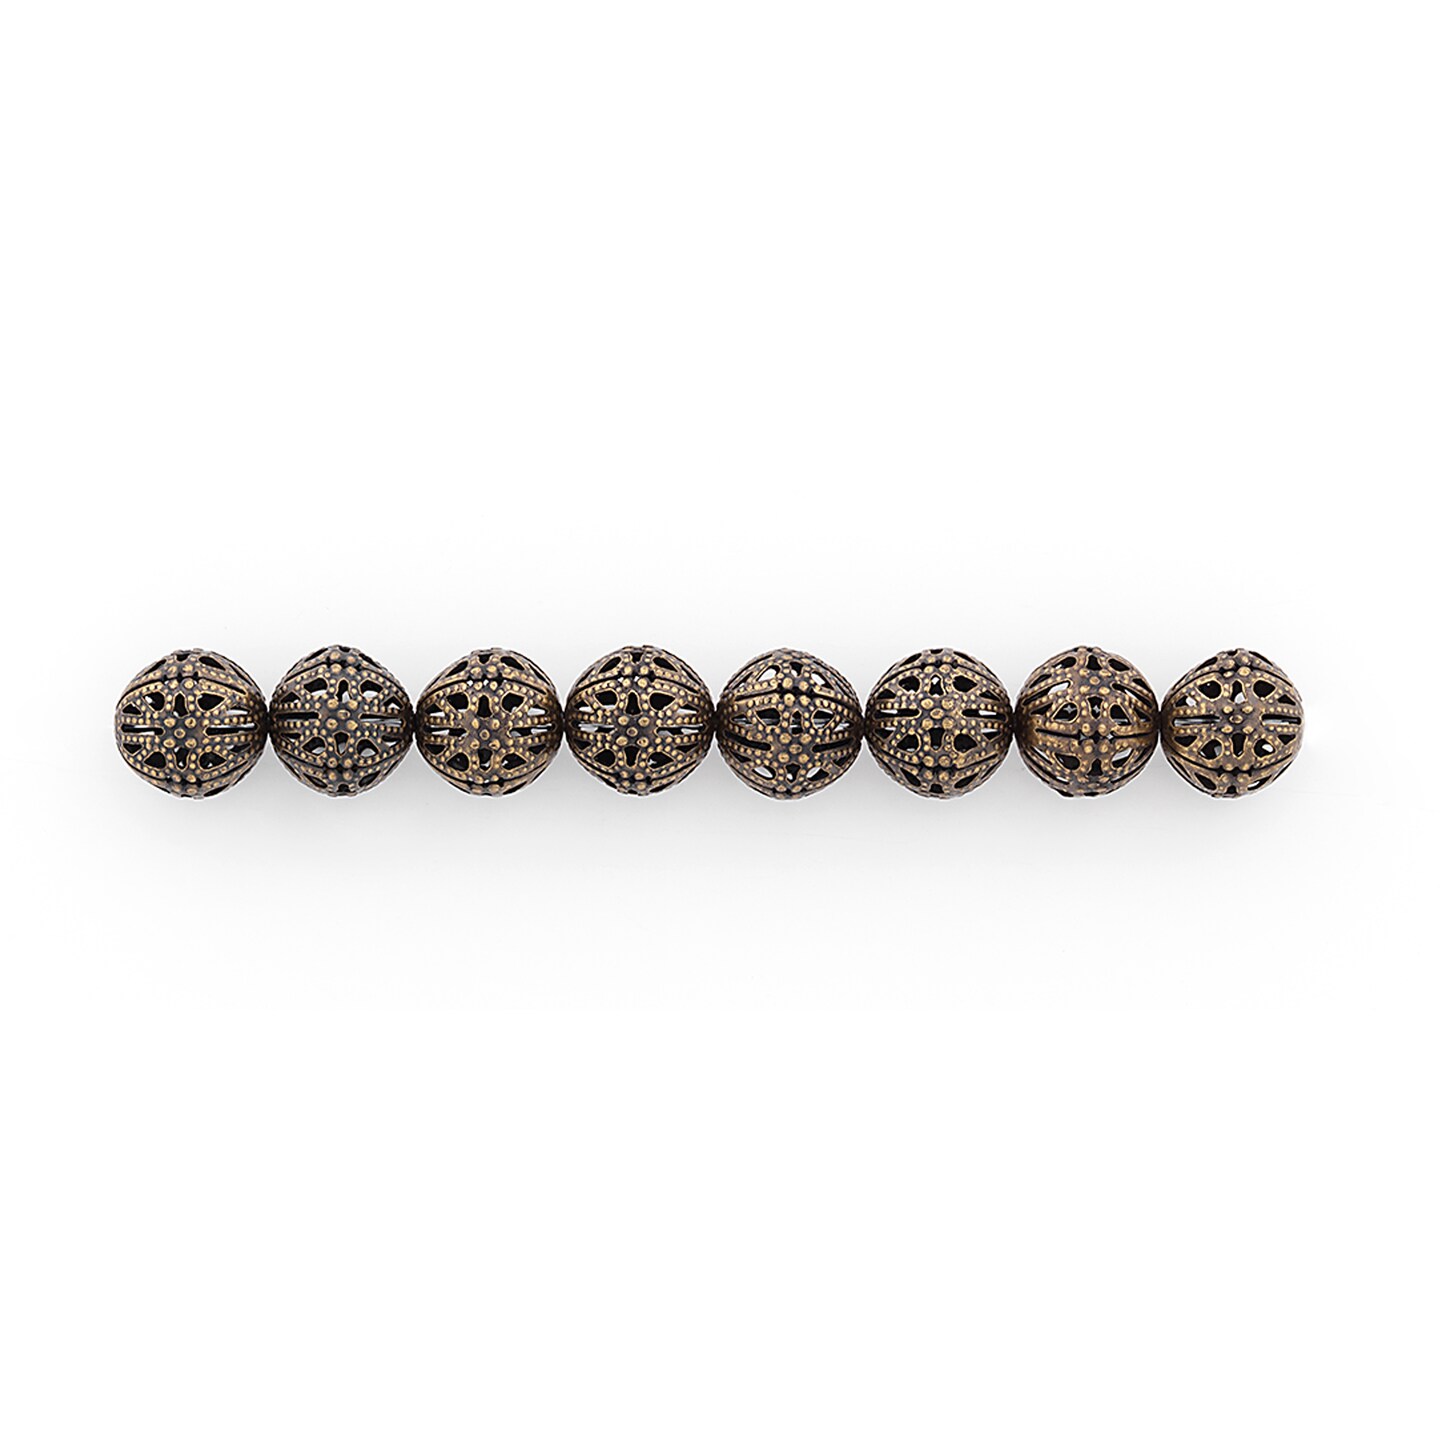 Filigree Metal 14mm Roubd Beads Pack of 8 - Antique Bronze